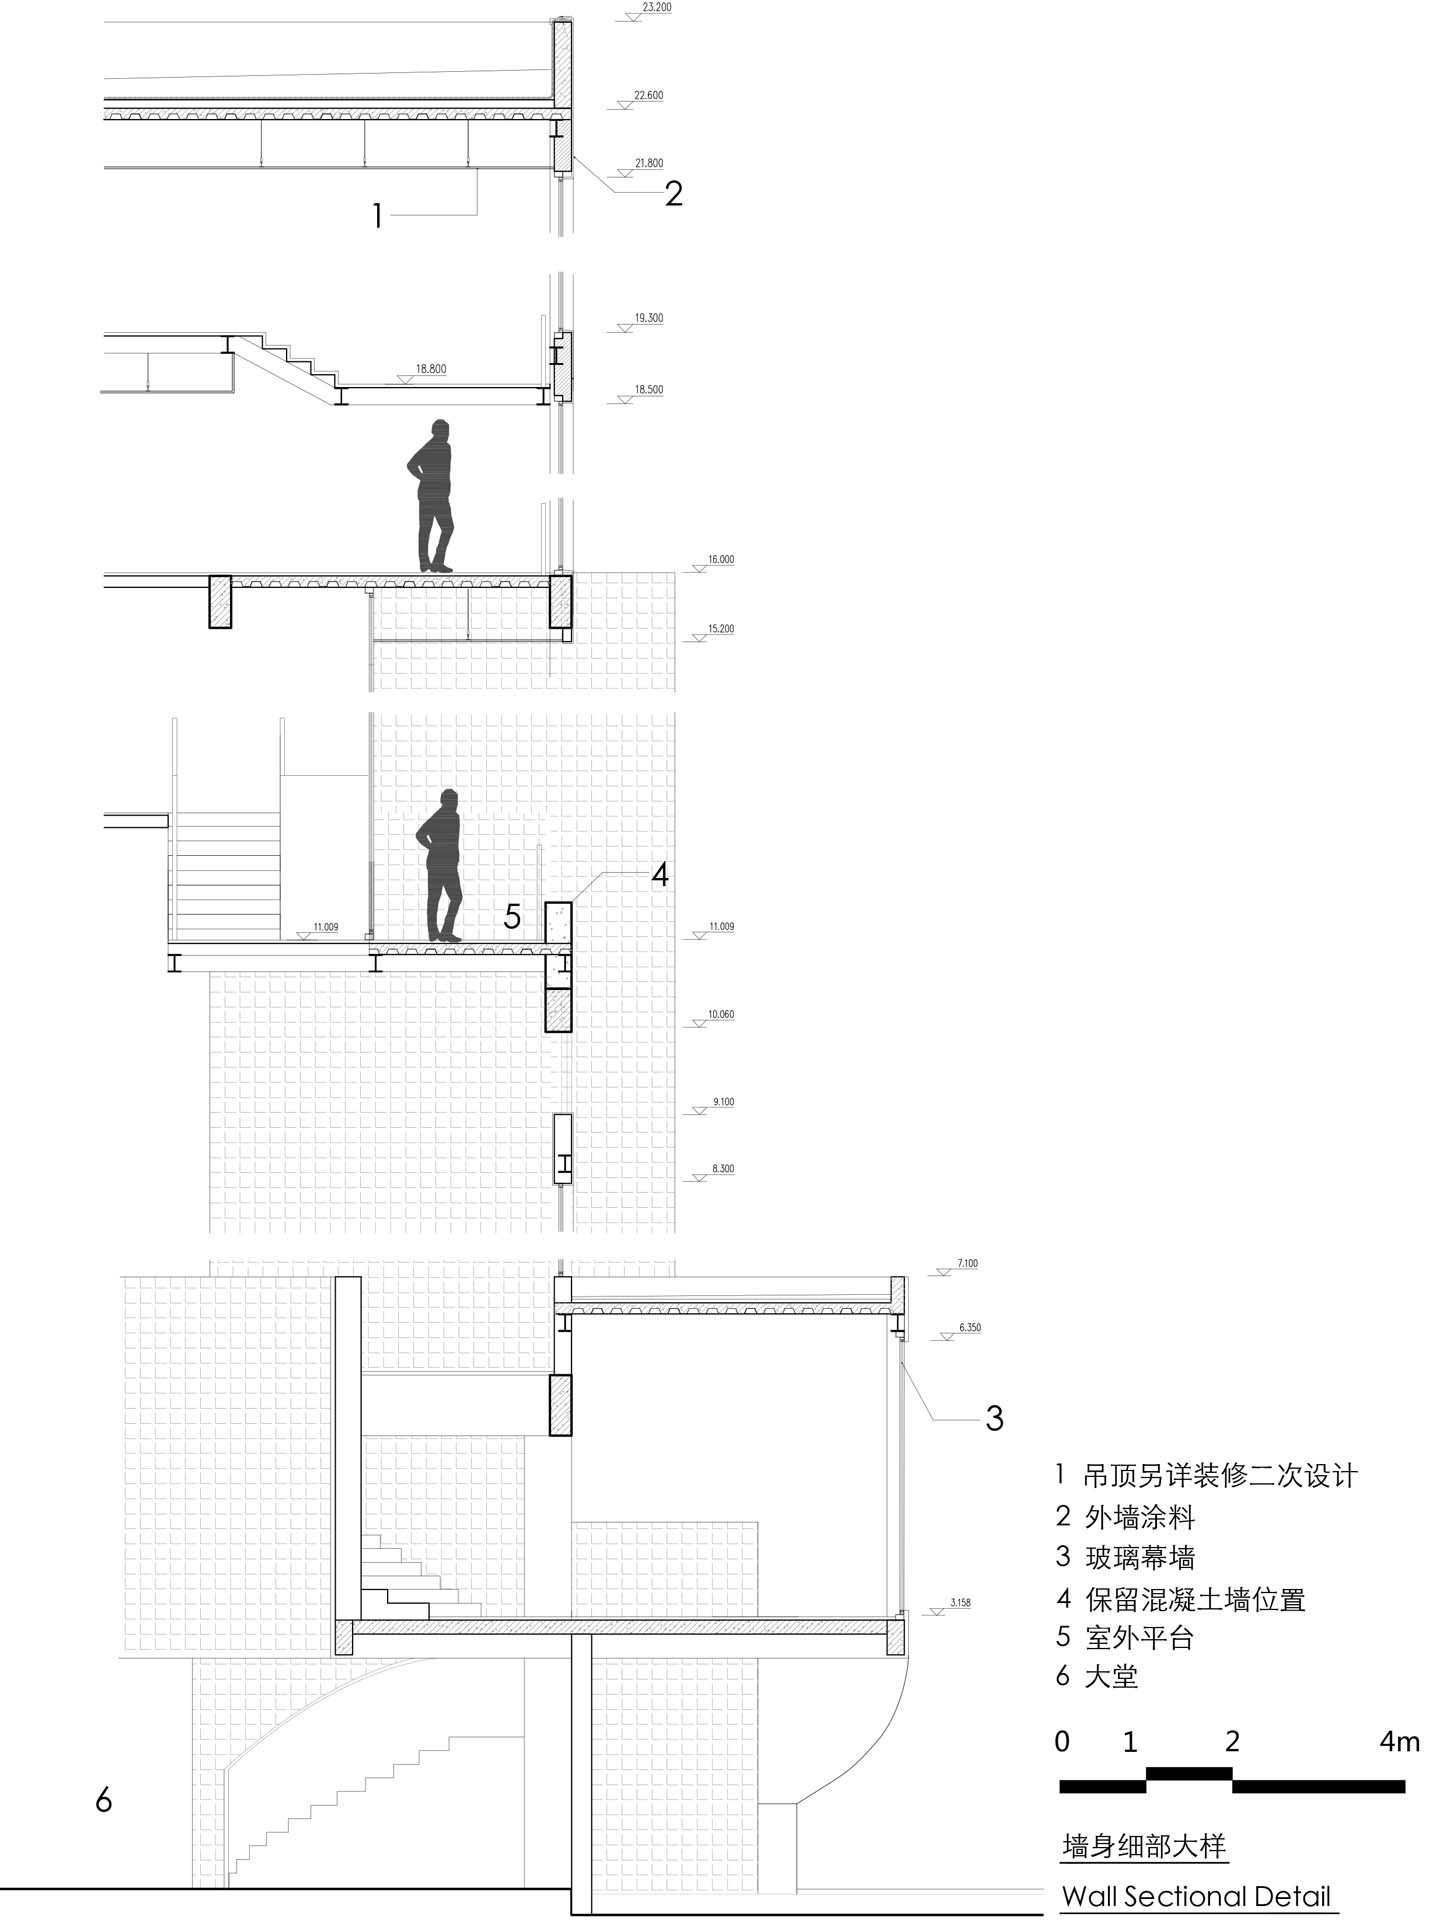 45_088_PII_SYCH_申窑艺术中心二期-墙身细部大样_Wall_Section_Detail.jpg